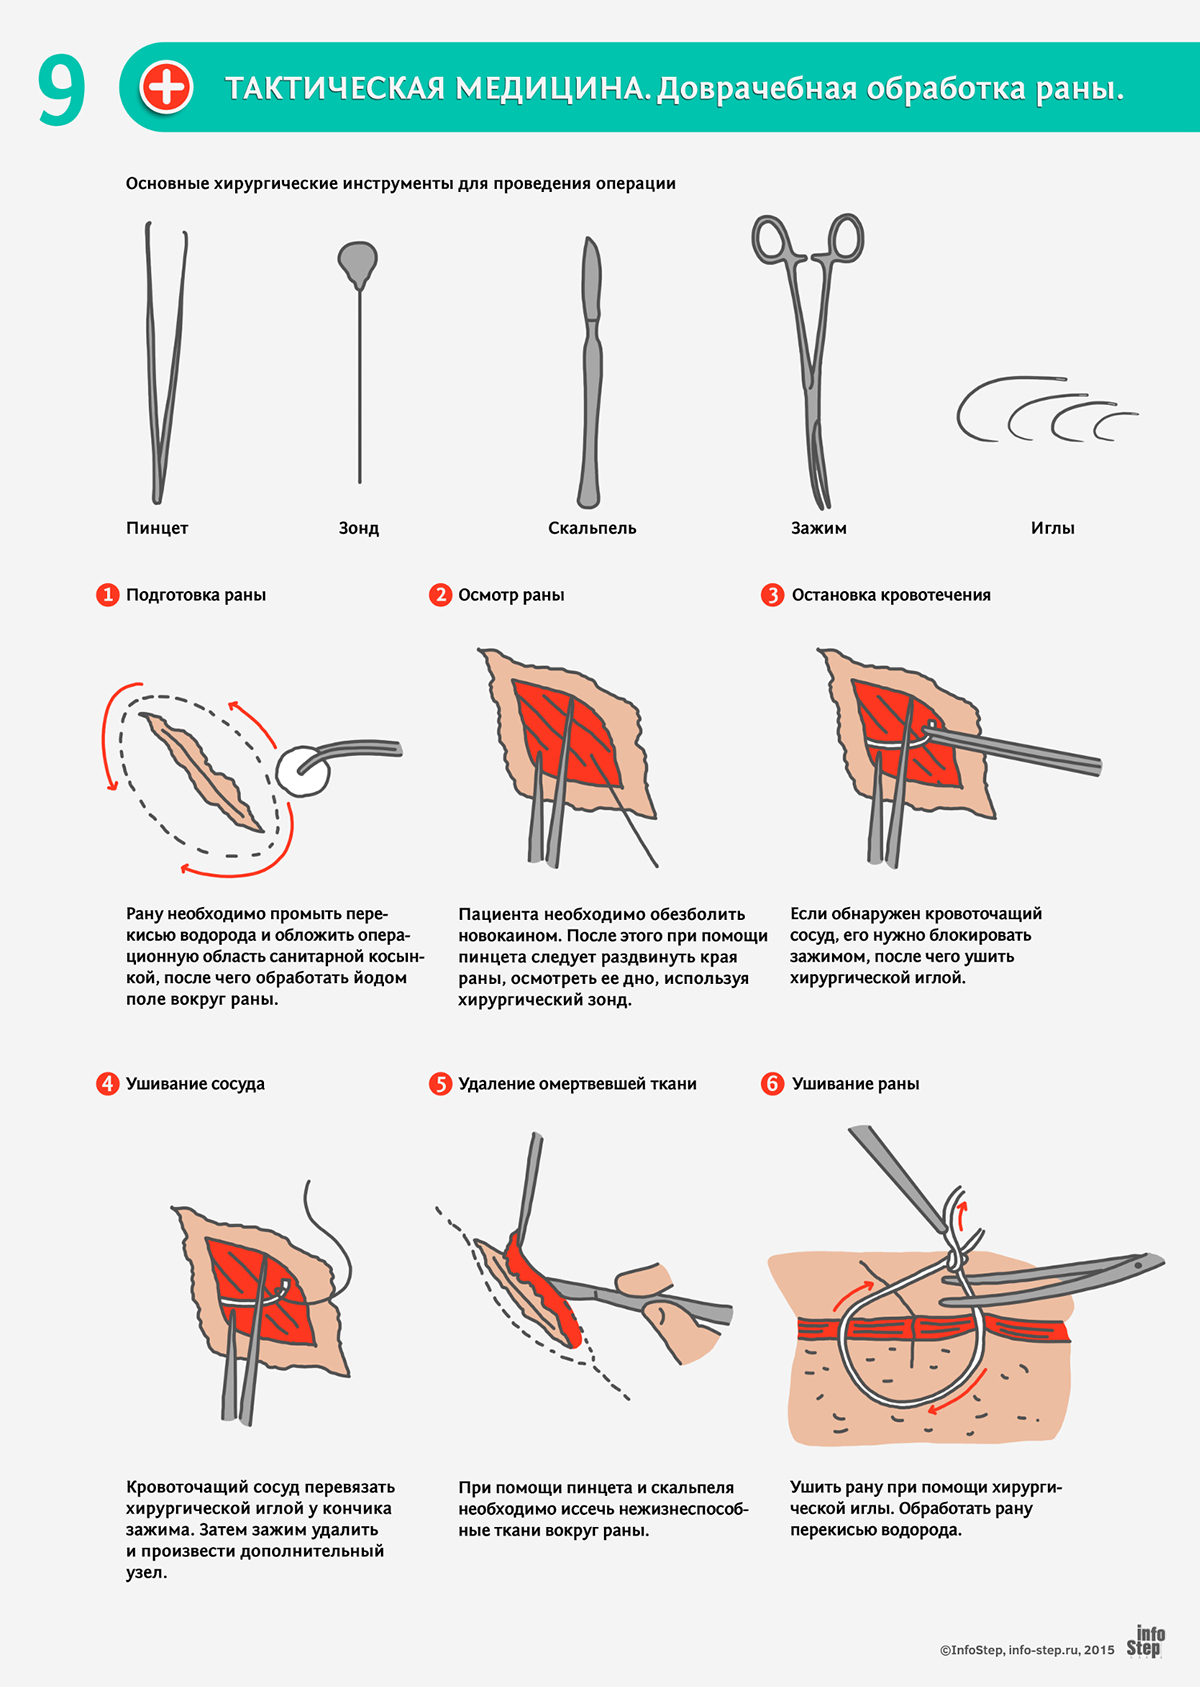 Treatment wound injured tactical medicine info-step infostep information design infographics